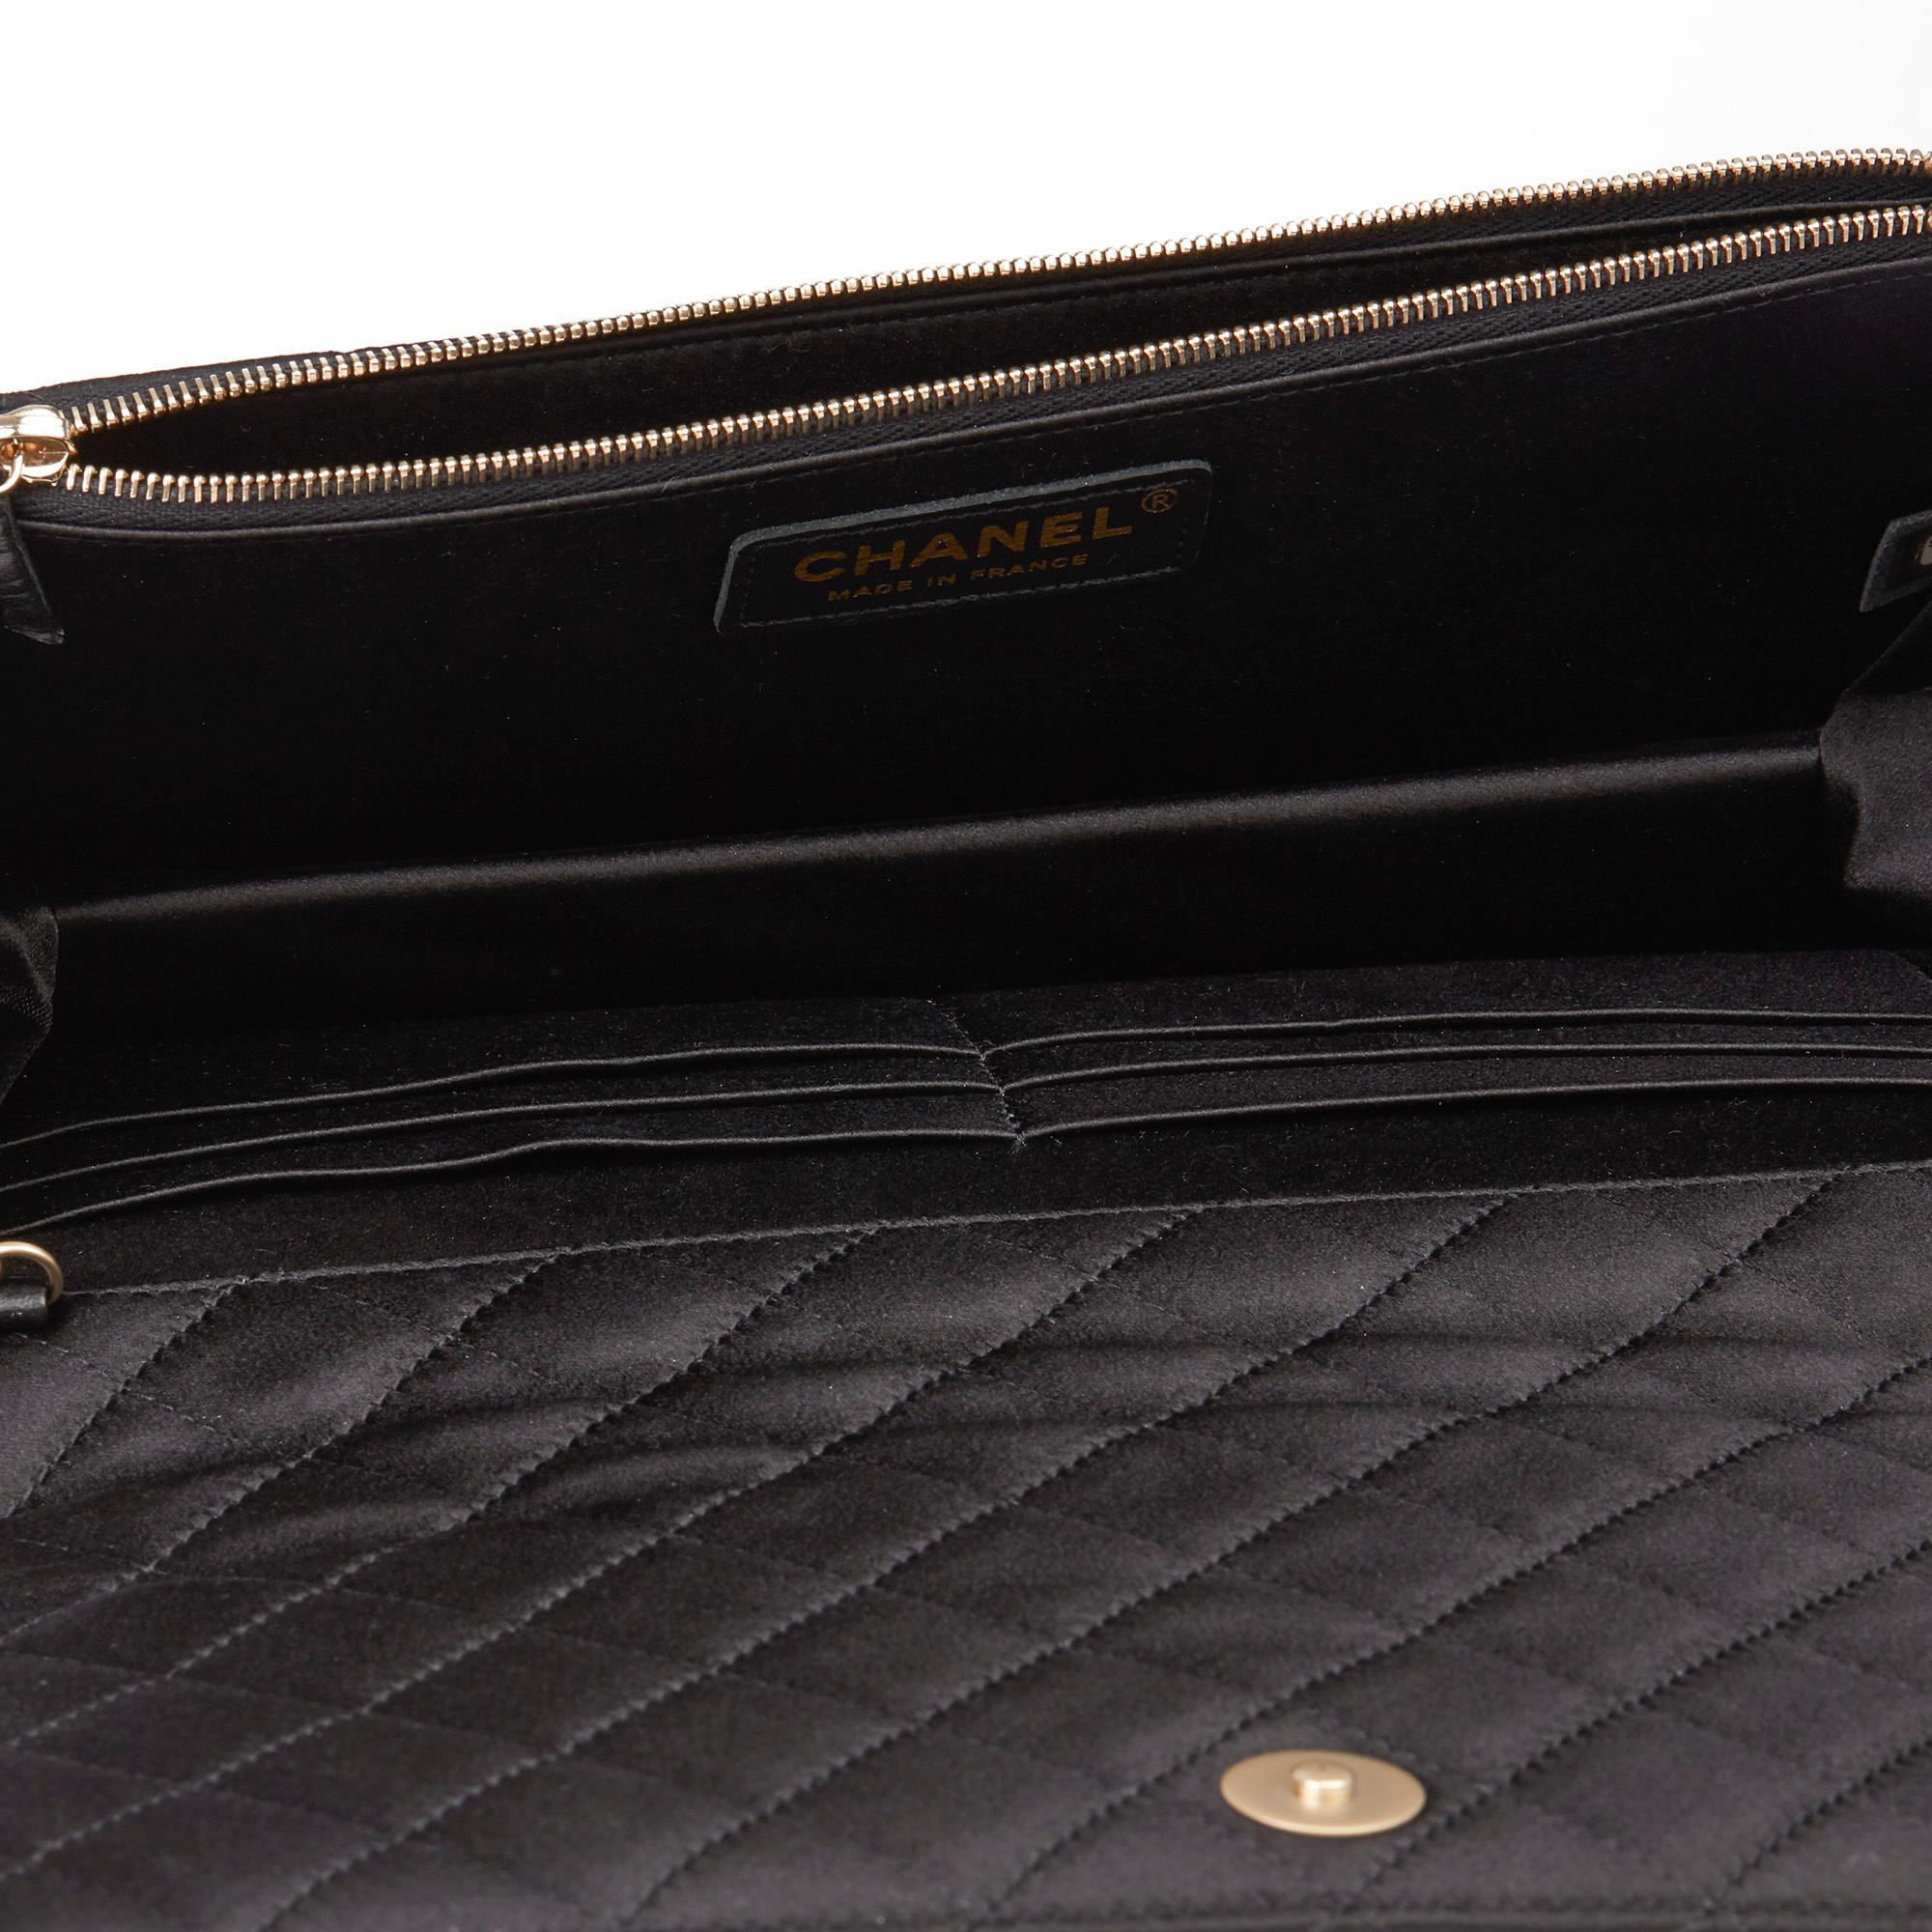 2016 Chanel Black Embellished Quilted Satin Pearl Flap Bag 6